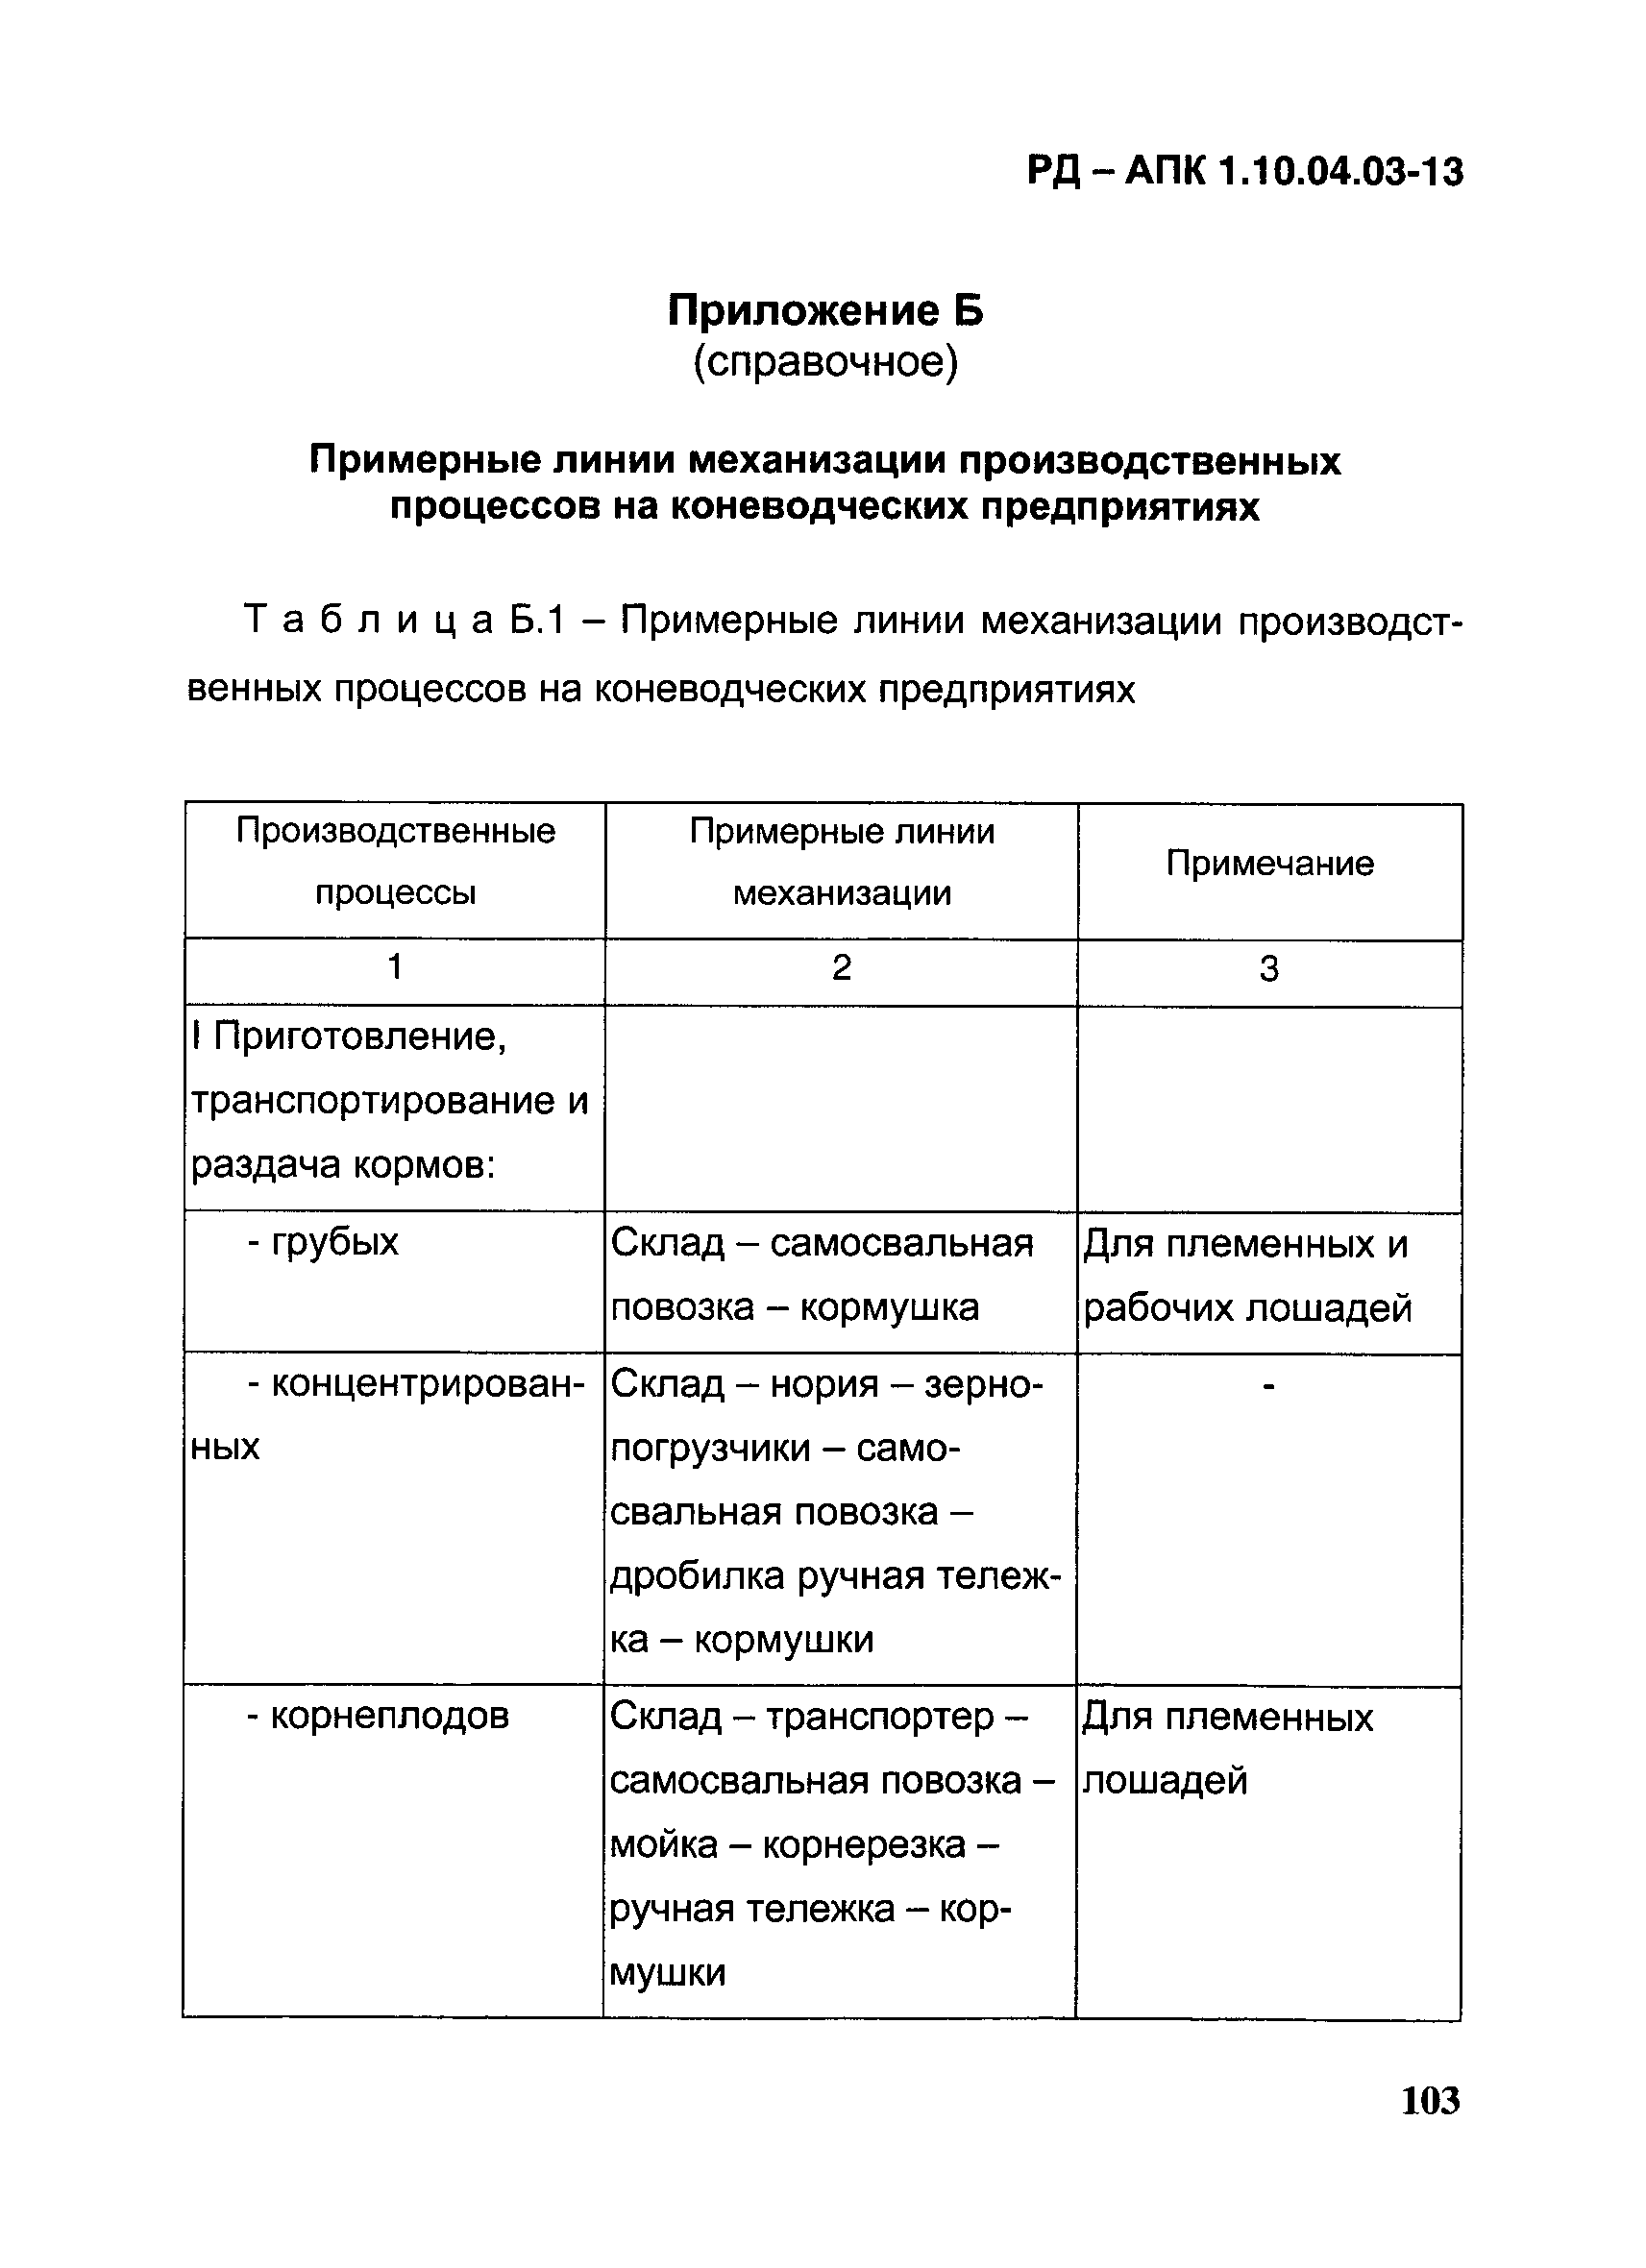 РД-АПК 1.10.04.03-13